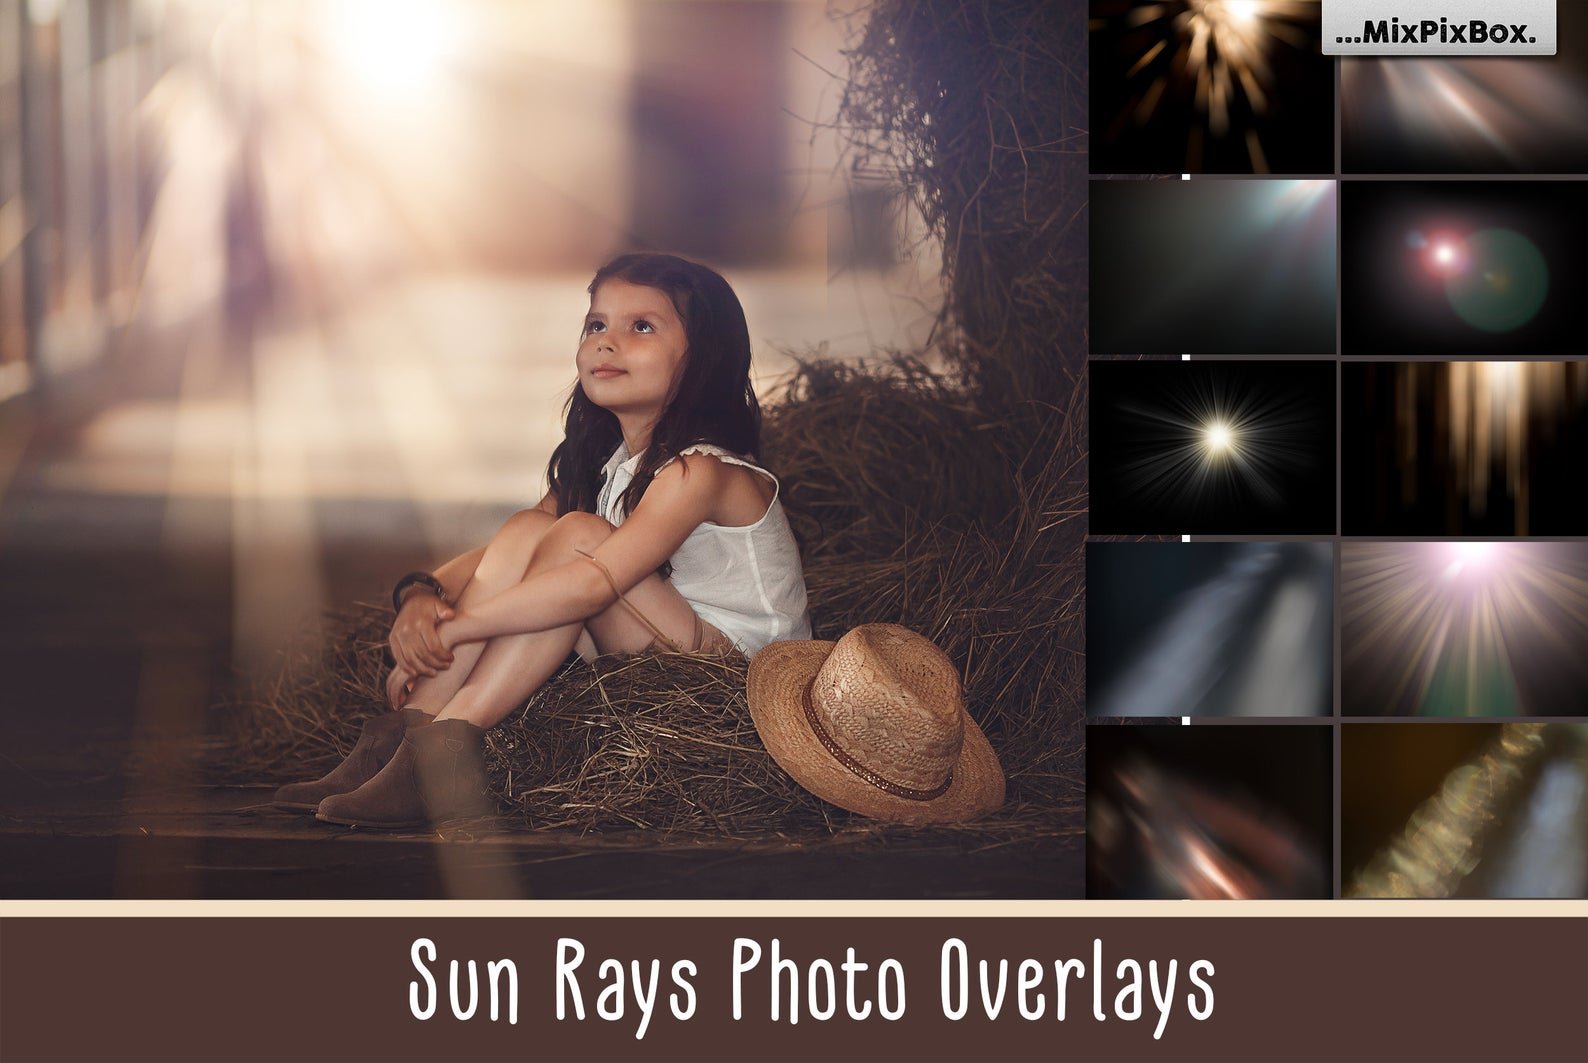 Sun Rays Photo Overlayscover image.